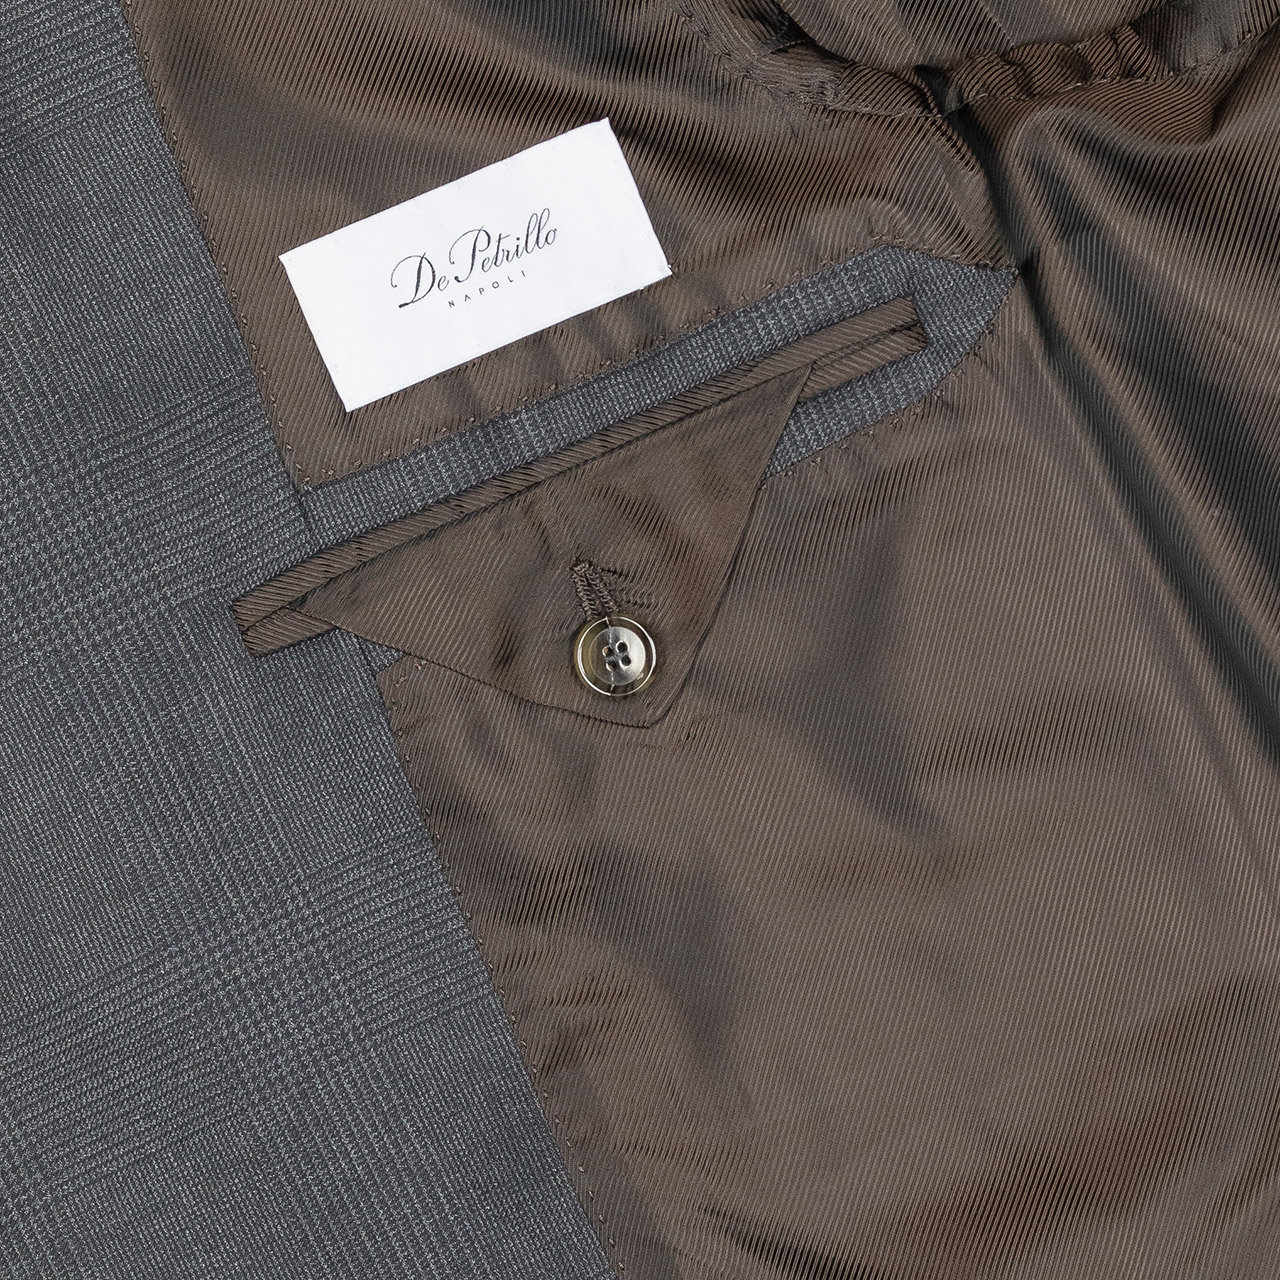 De Petrillo Anzug in dunkelgrau mit Gelencheck-Muster